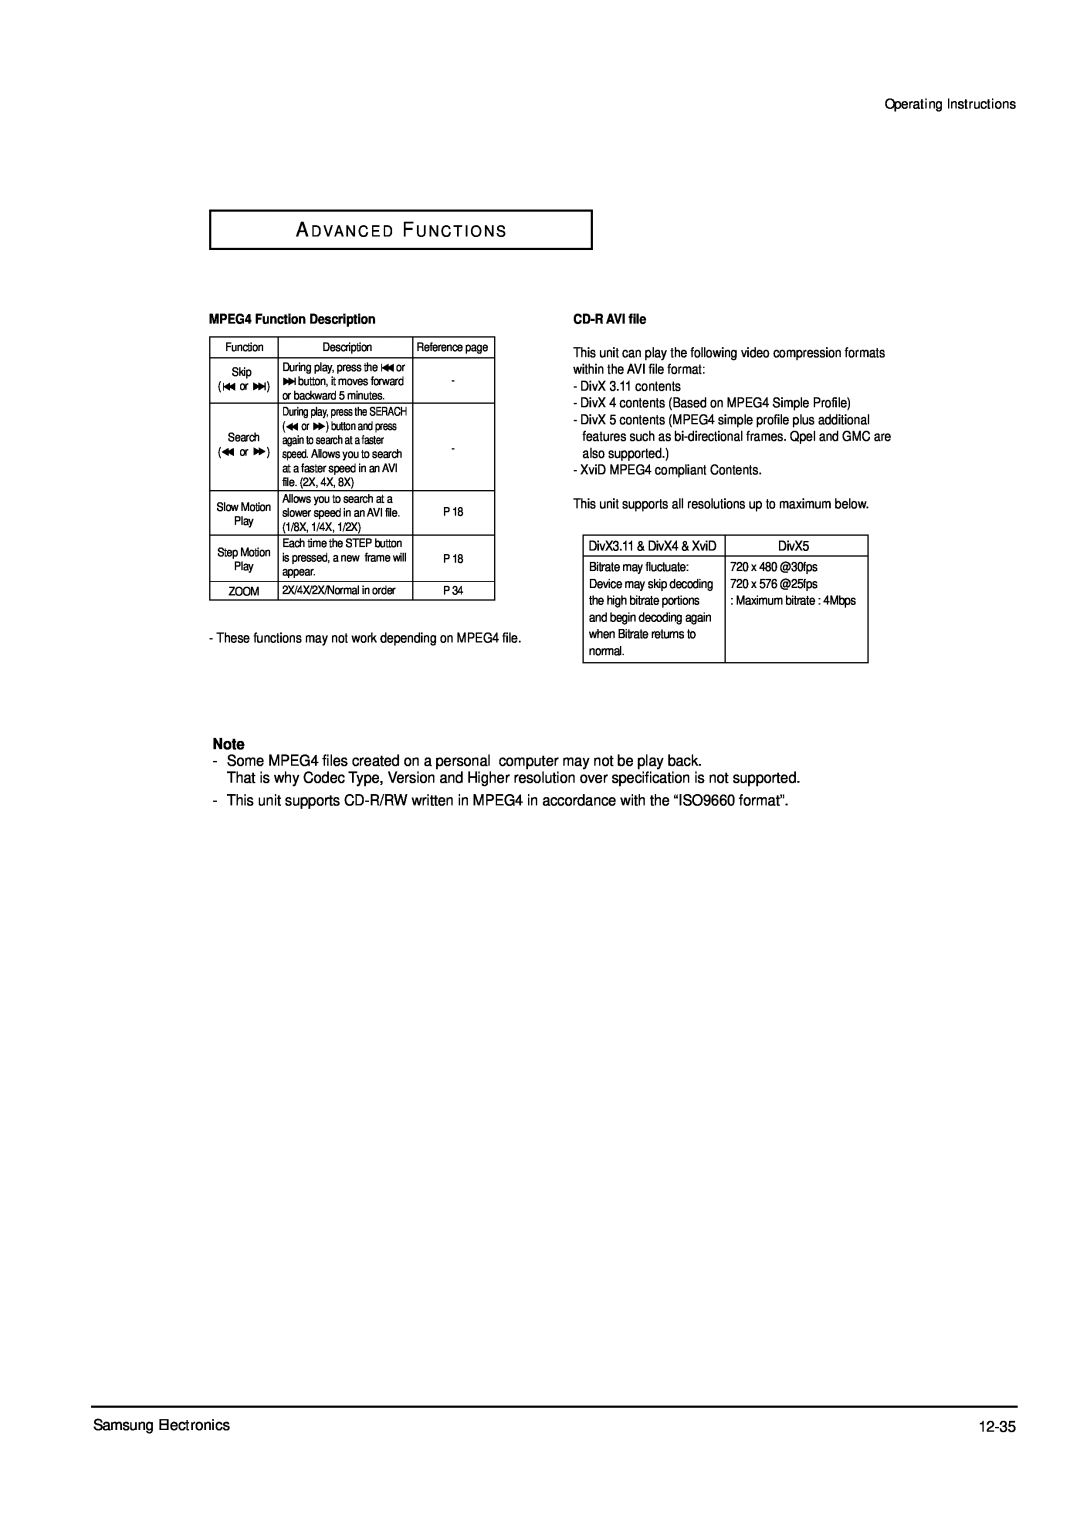 Samsung DVD-P355B/XEV Operating Instructions, A D Va N C E D F U N C T I O N S, ENG-42, MPEG4 Function Description 